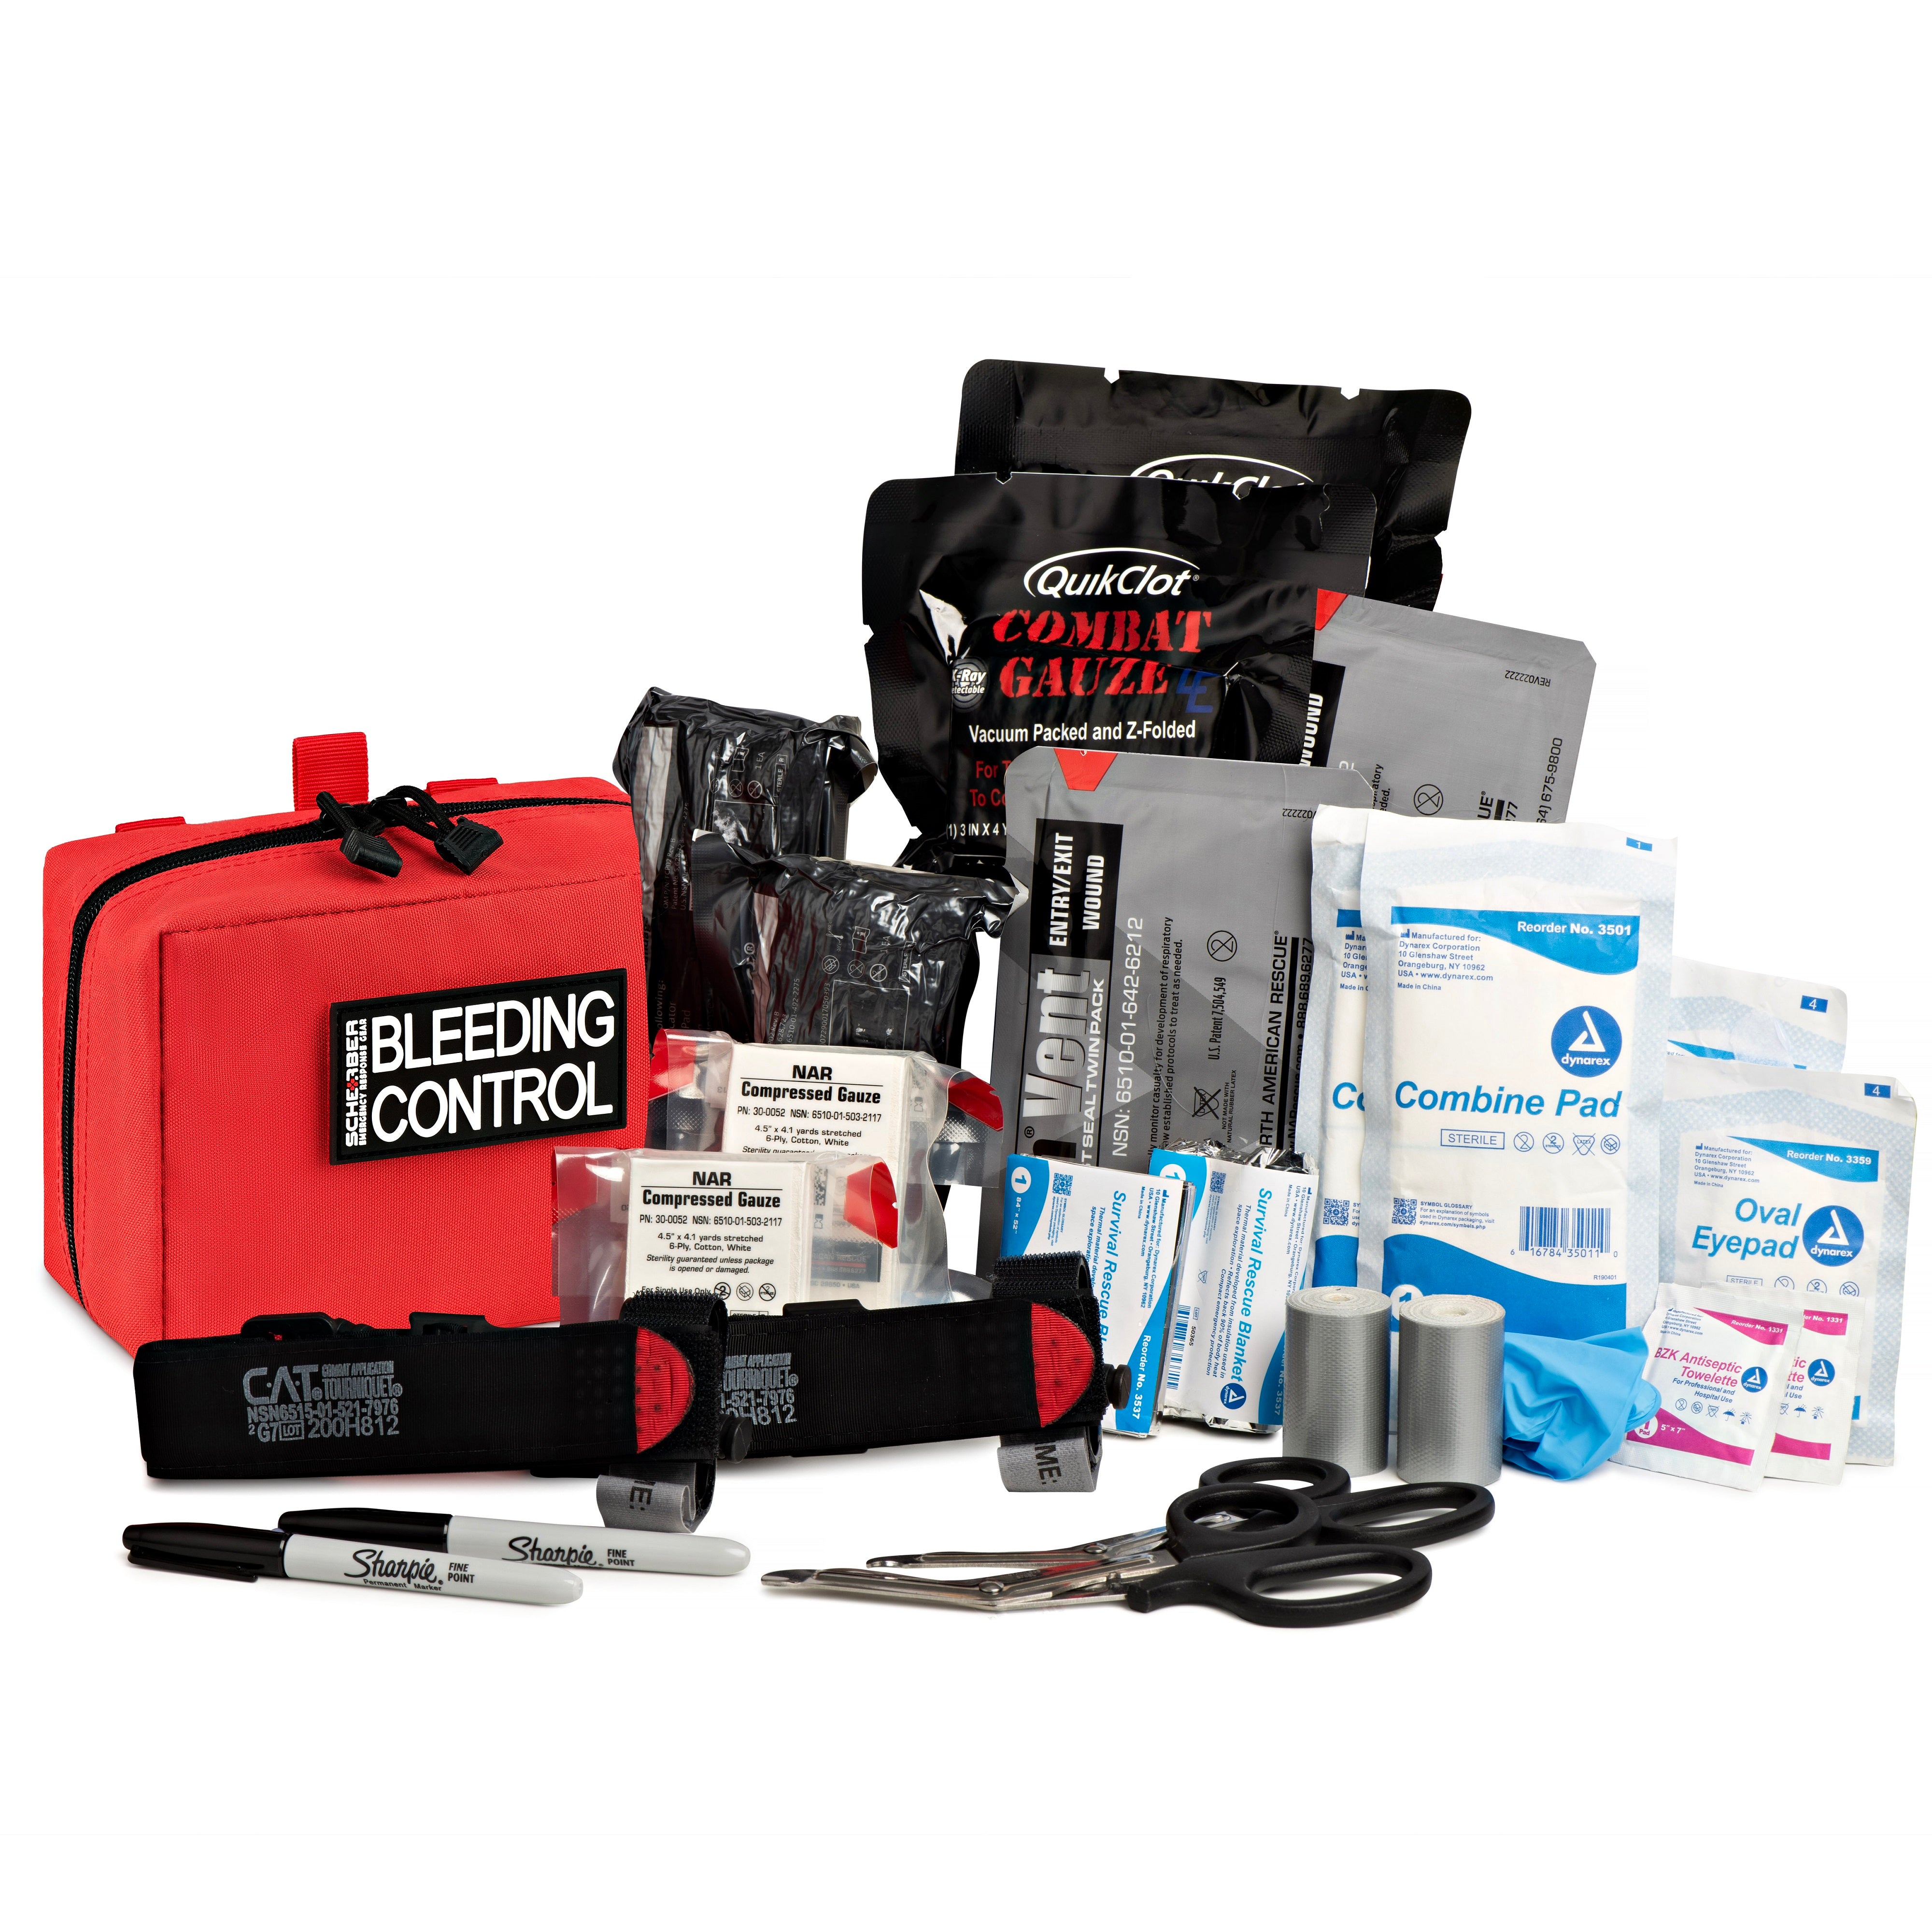 Scherber Public Access Bleeding Control Kit | Trauma Equipment, First Aid Supplies | Advanced+